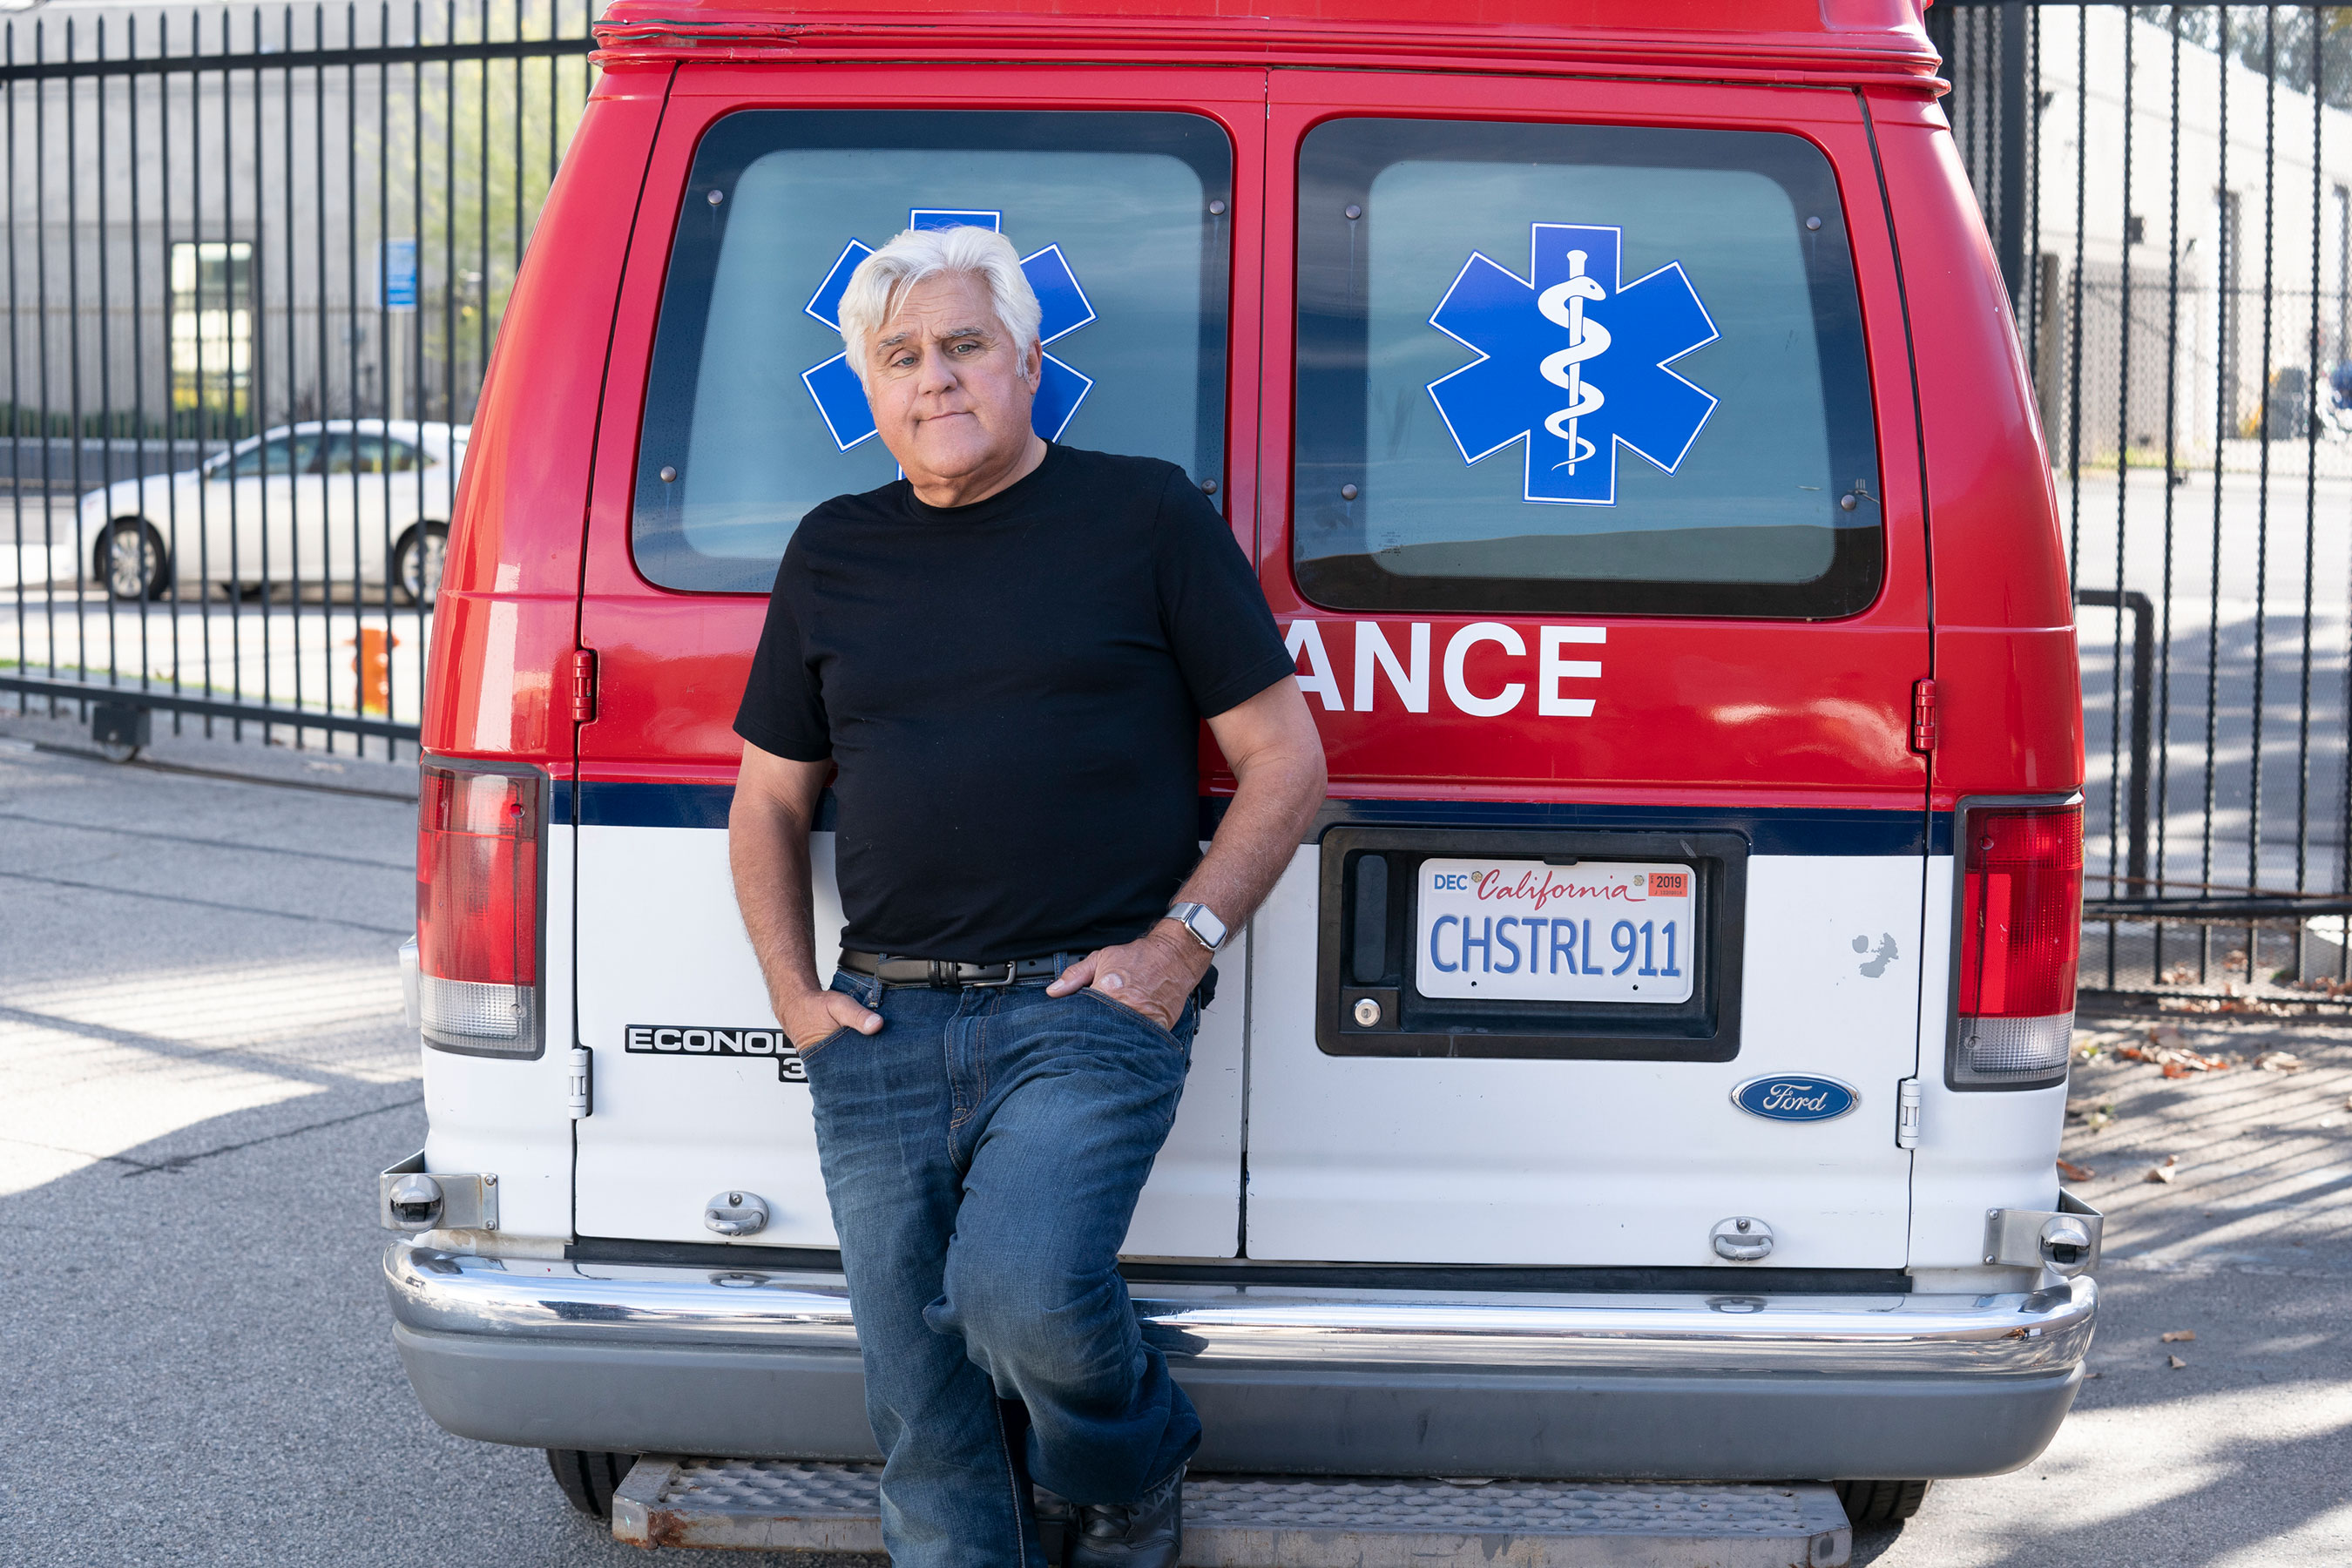 Jay Leno poses by an ambulance